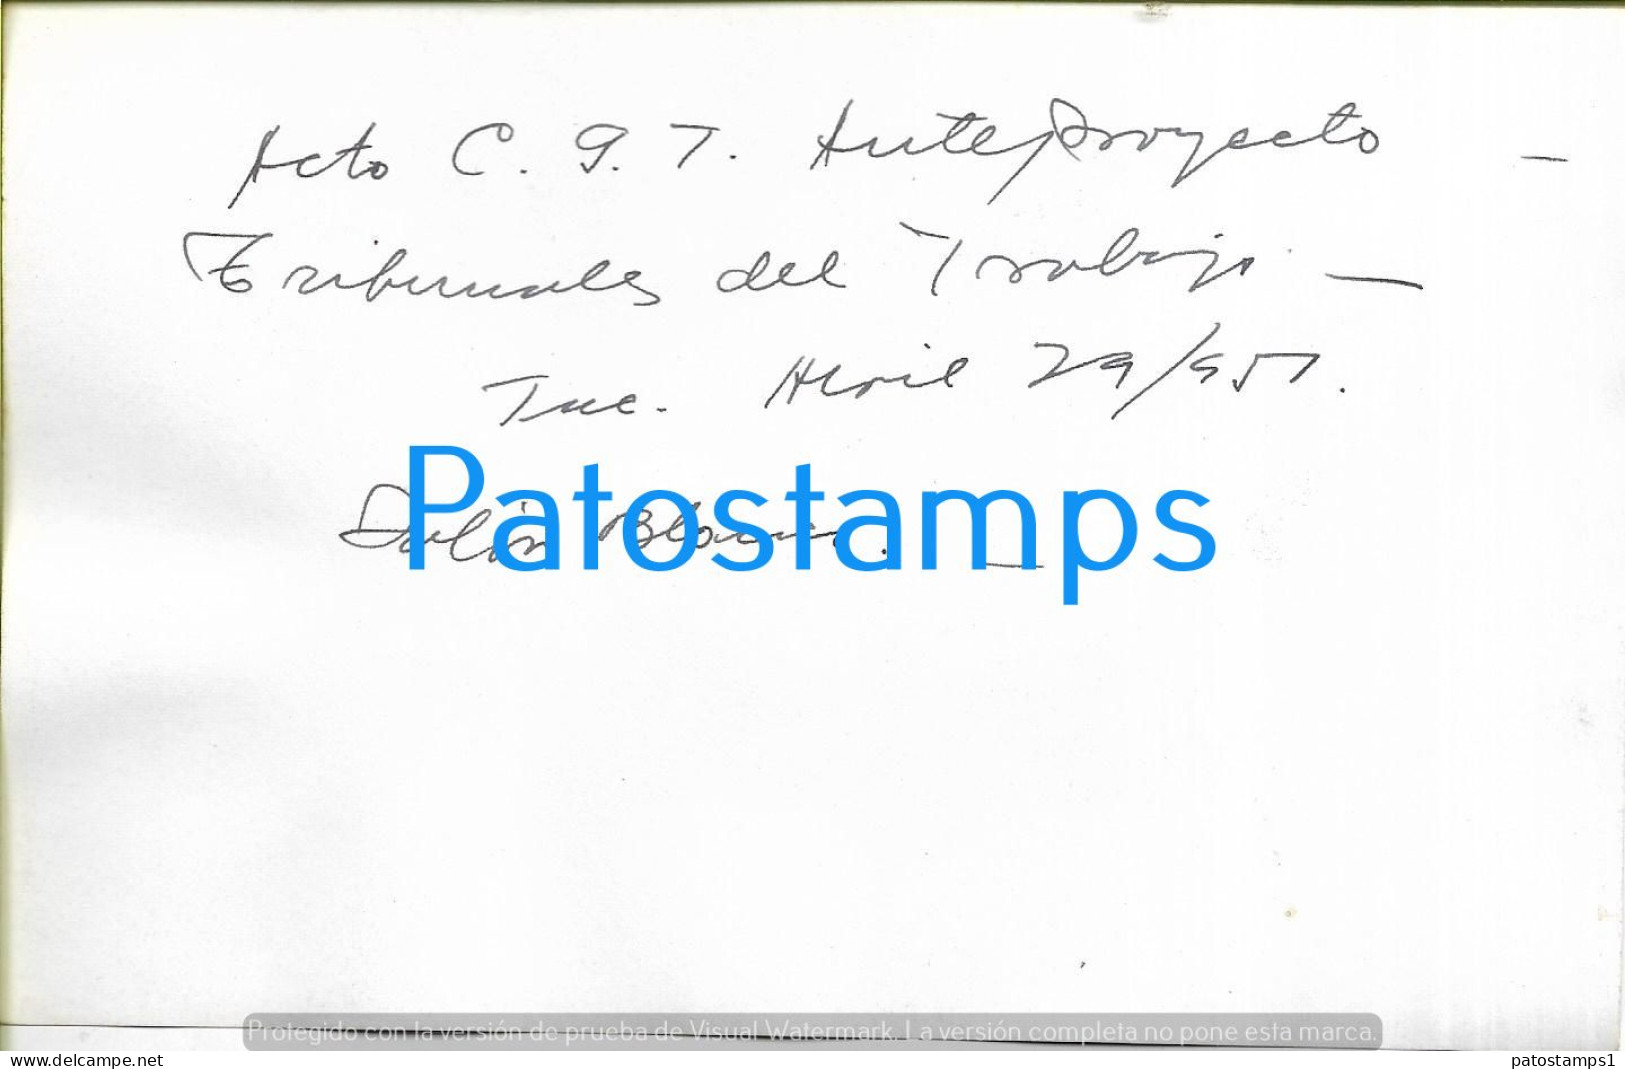 229183 ARGENTINA TUCUMAN GOBERNADOR FERNANDO RIERA 1951 ACTO C.G.T SALON BLANCO 18.5 X 11.5 CM PHOTO NO POSTCARD - Argentinien